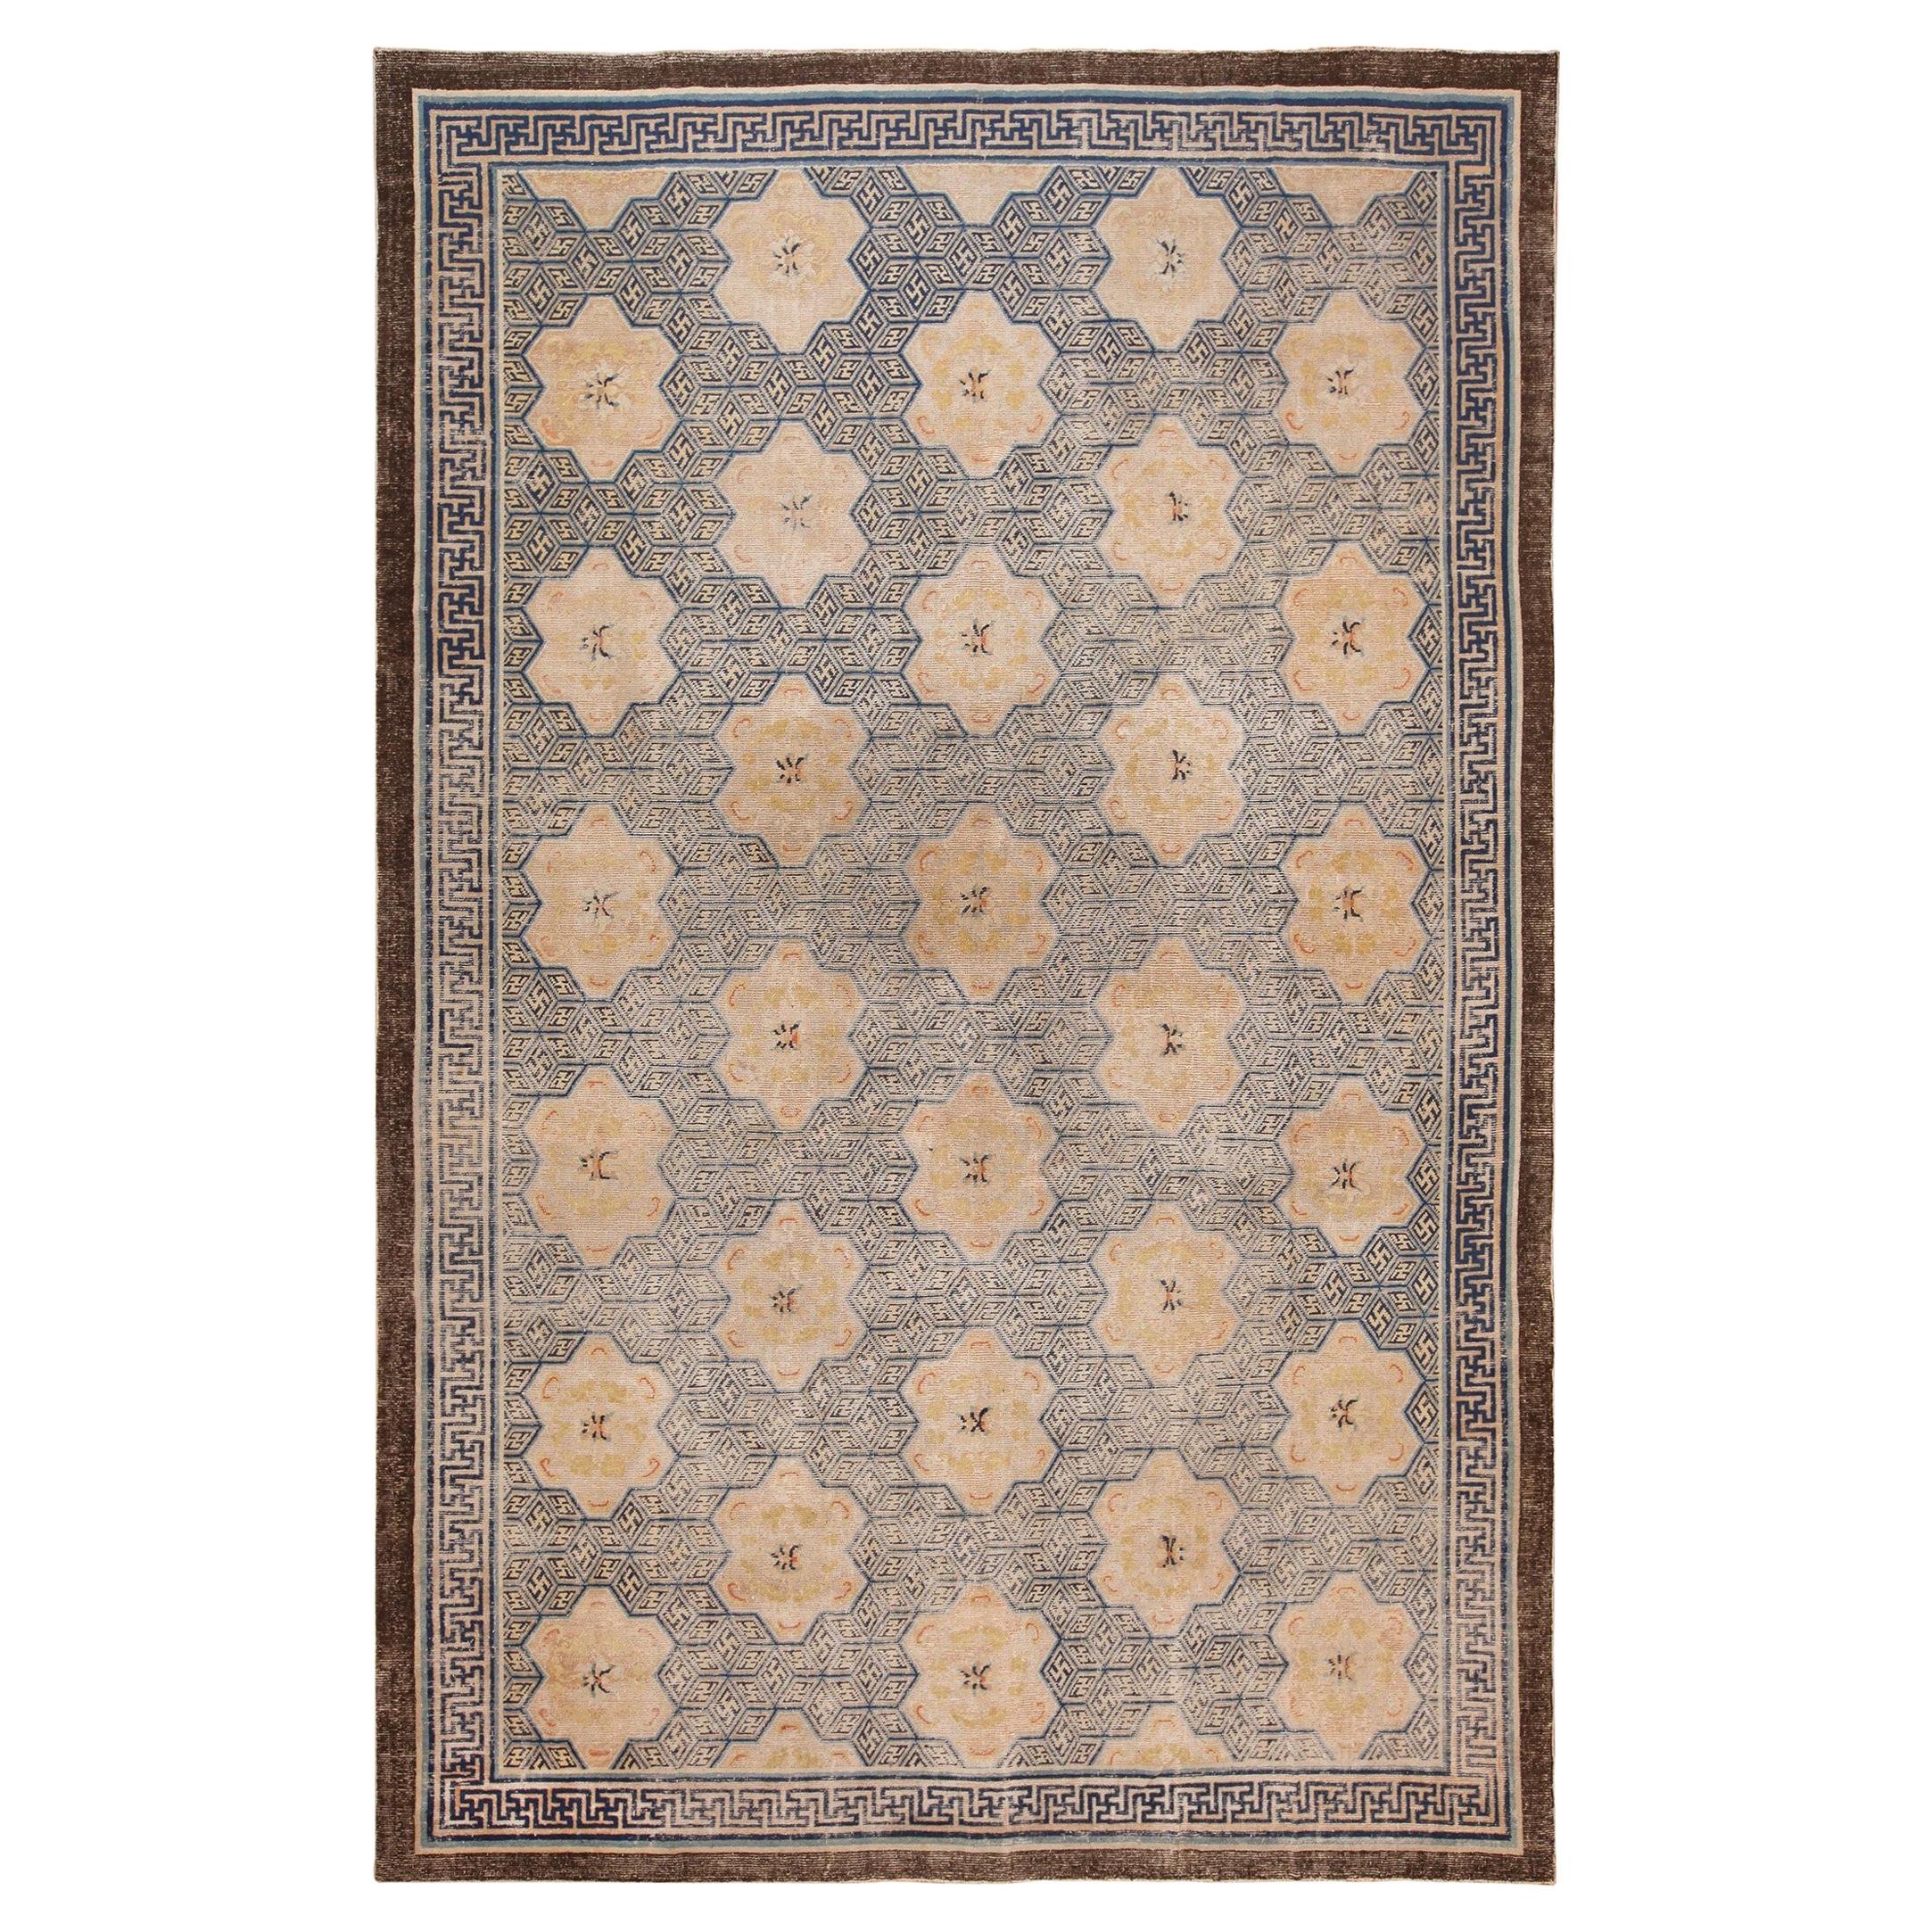 Rare Antique 17th Century Chinese Ningxia Carpet